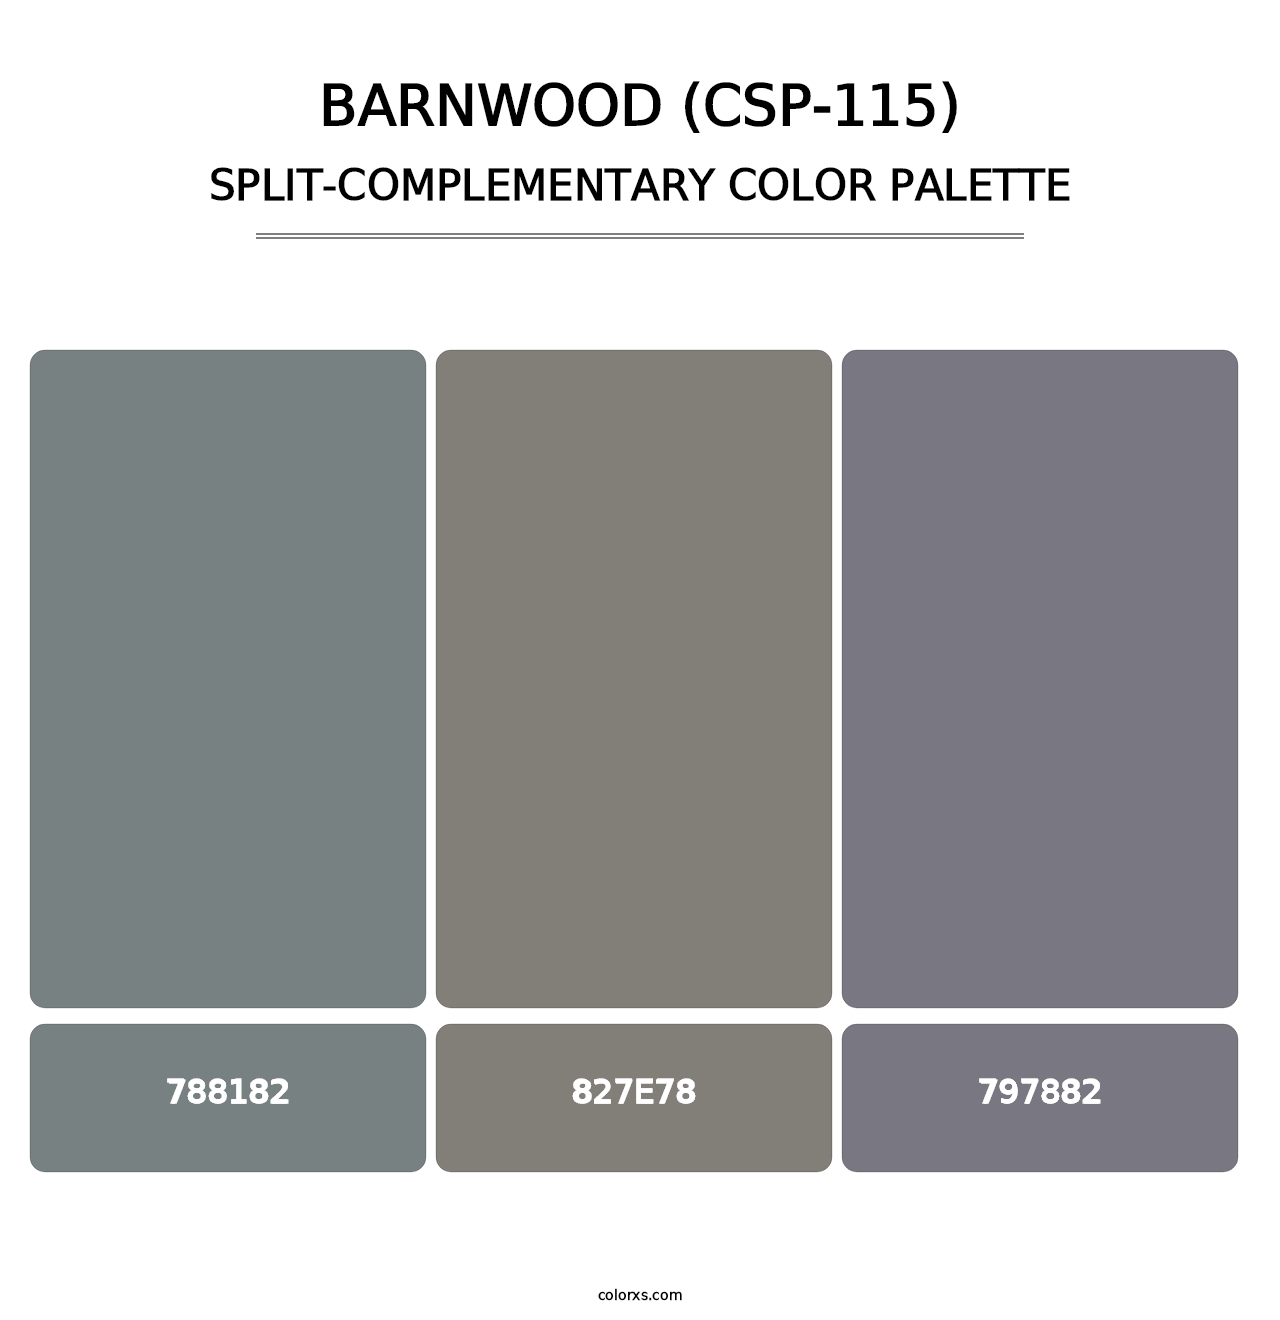 Barnwood (CSP-115) - Split-Complementary Color Palette